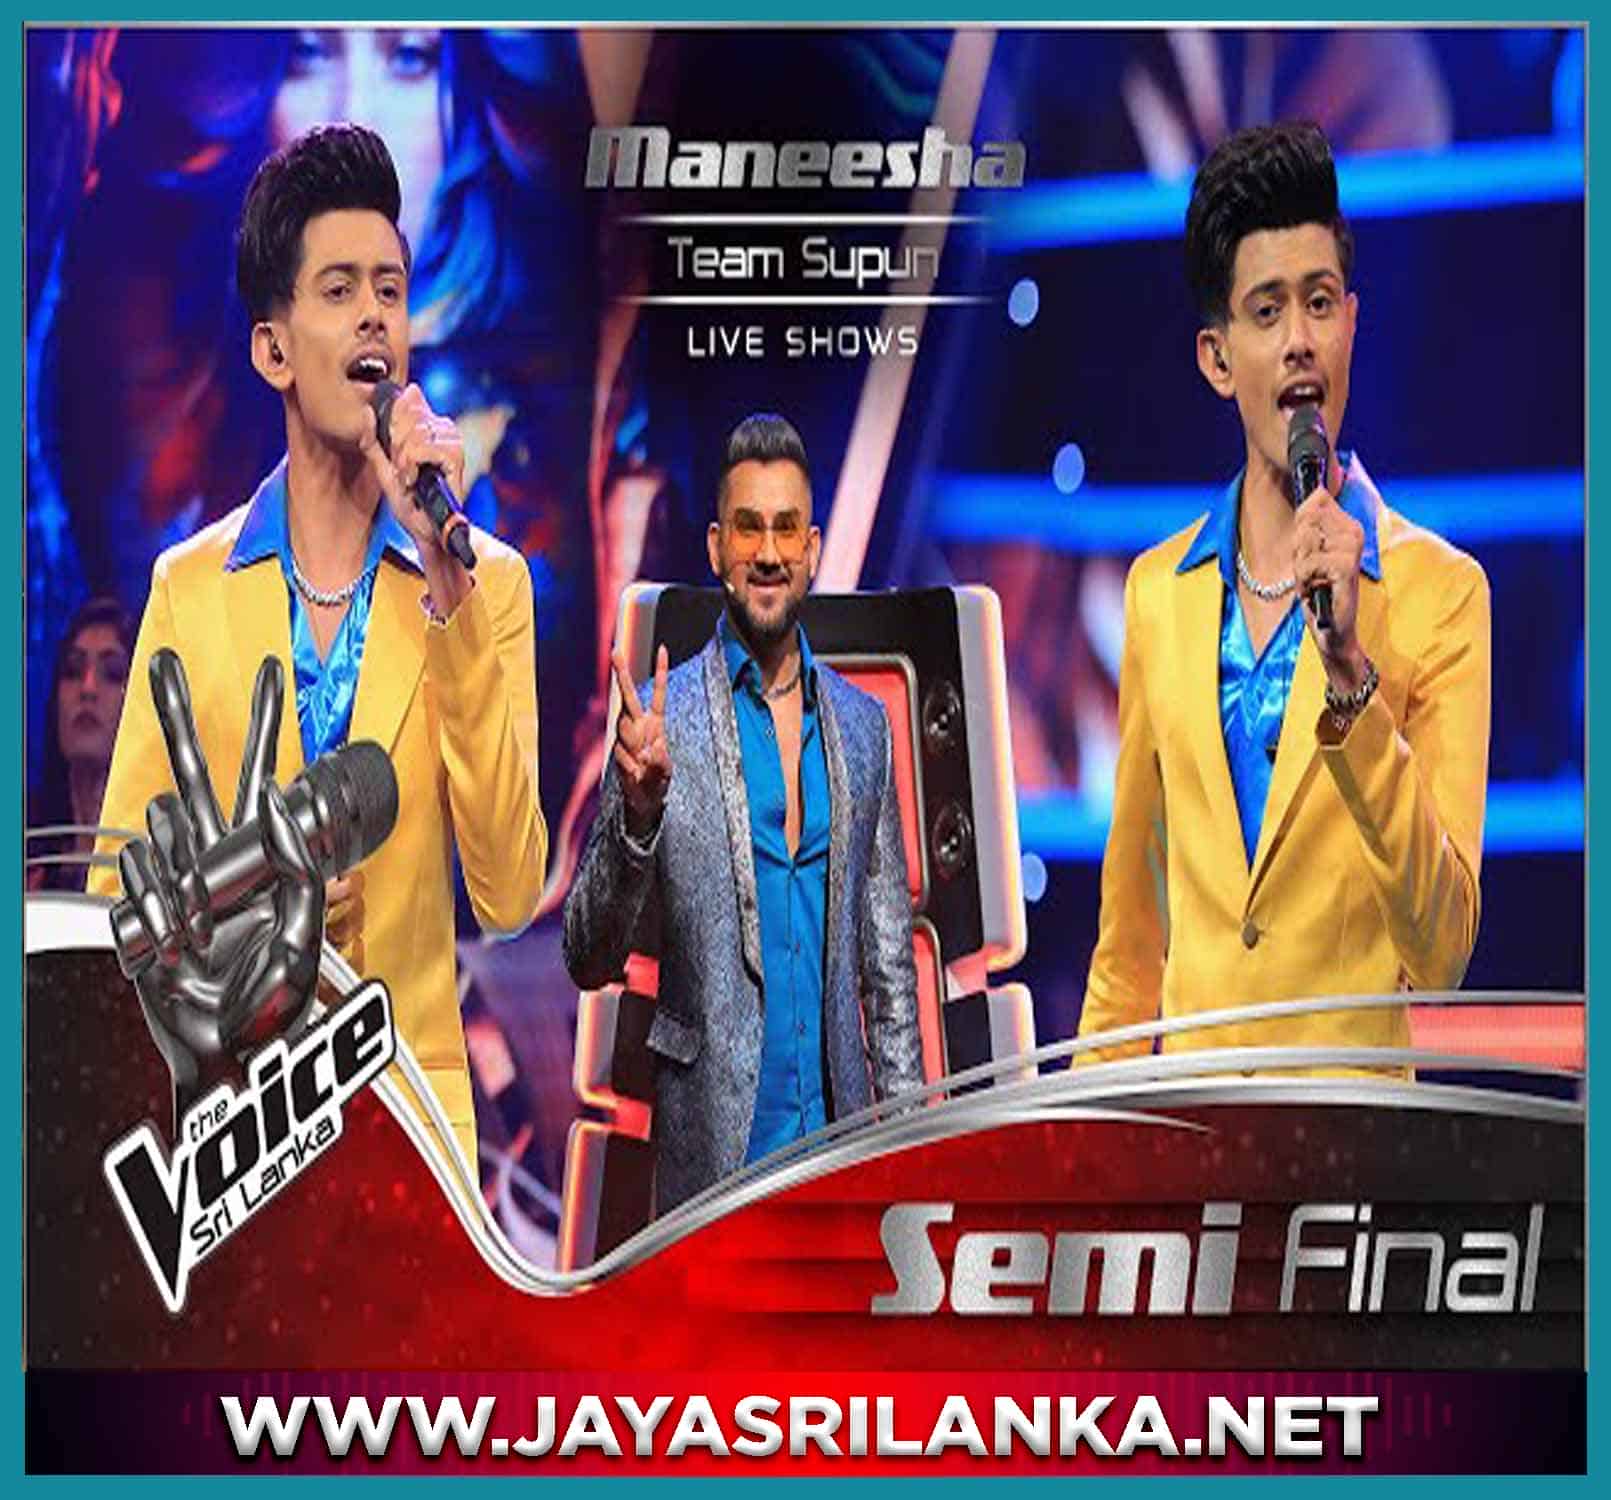 Sulangak Wela (The Voice Sri Lanka Semi Final)